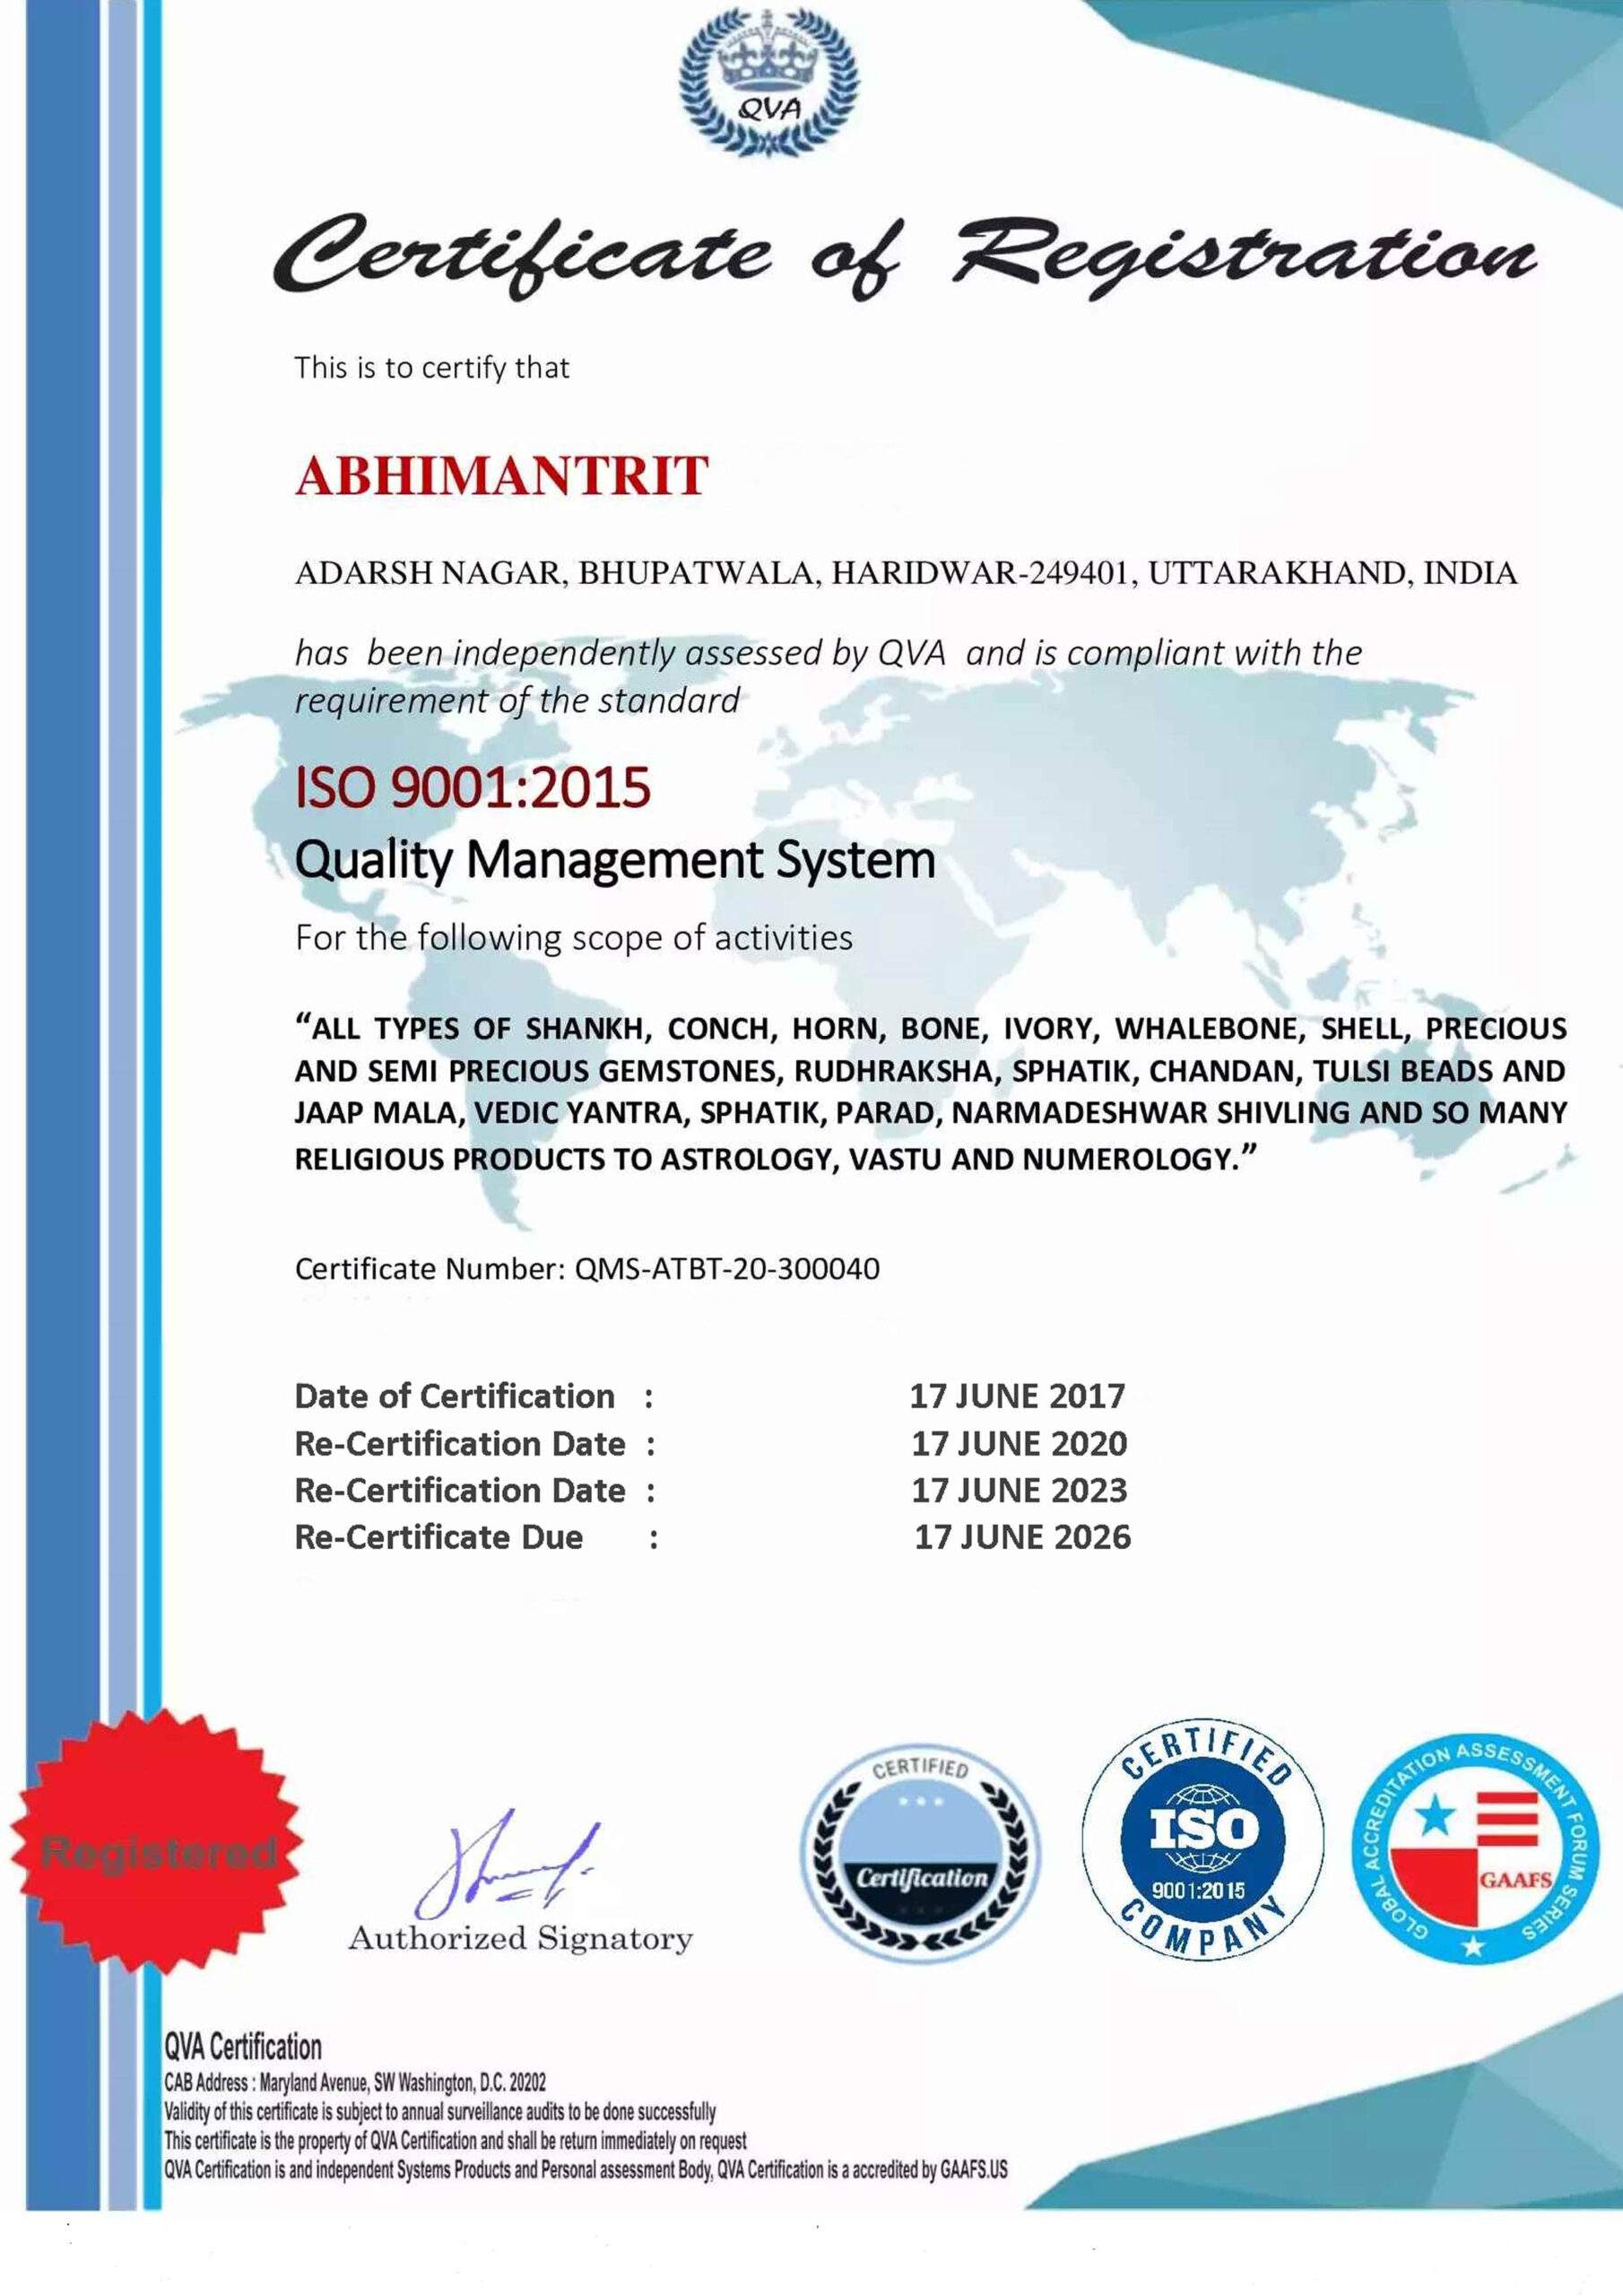 ISO 90012015 REGISTRATION CERTIFICATE